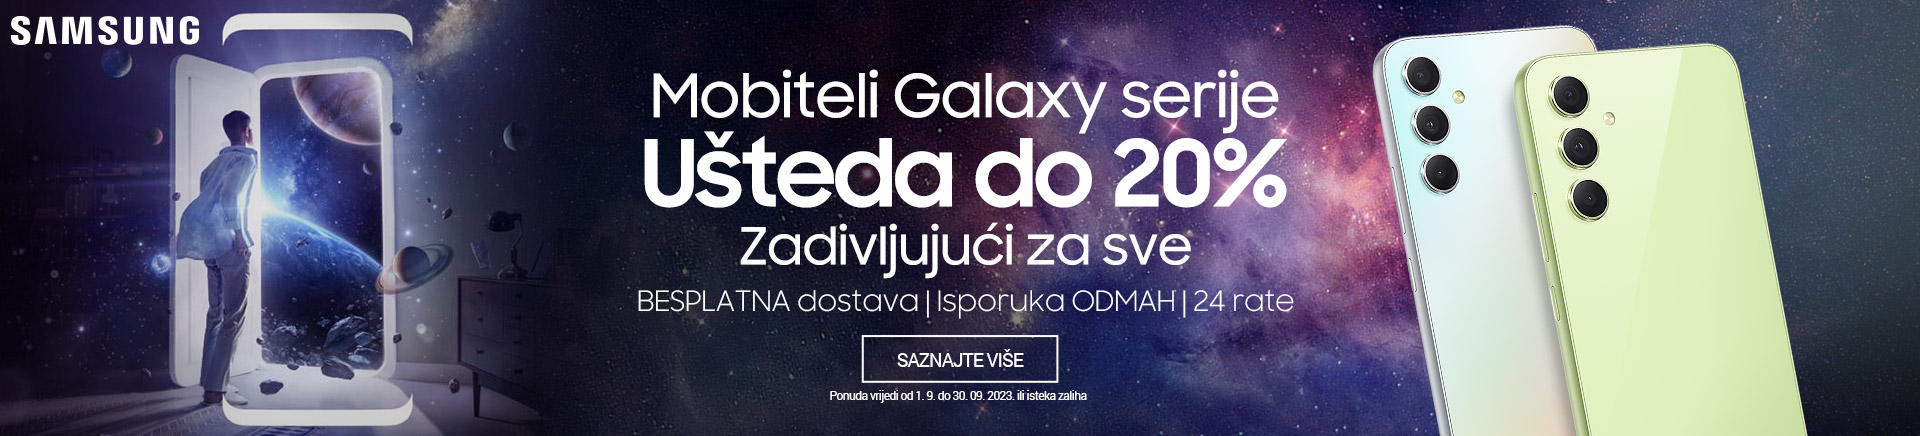 BA Samsung mobiteli galaxy serije MOBILE 380 X 436.jpg